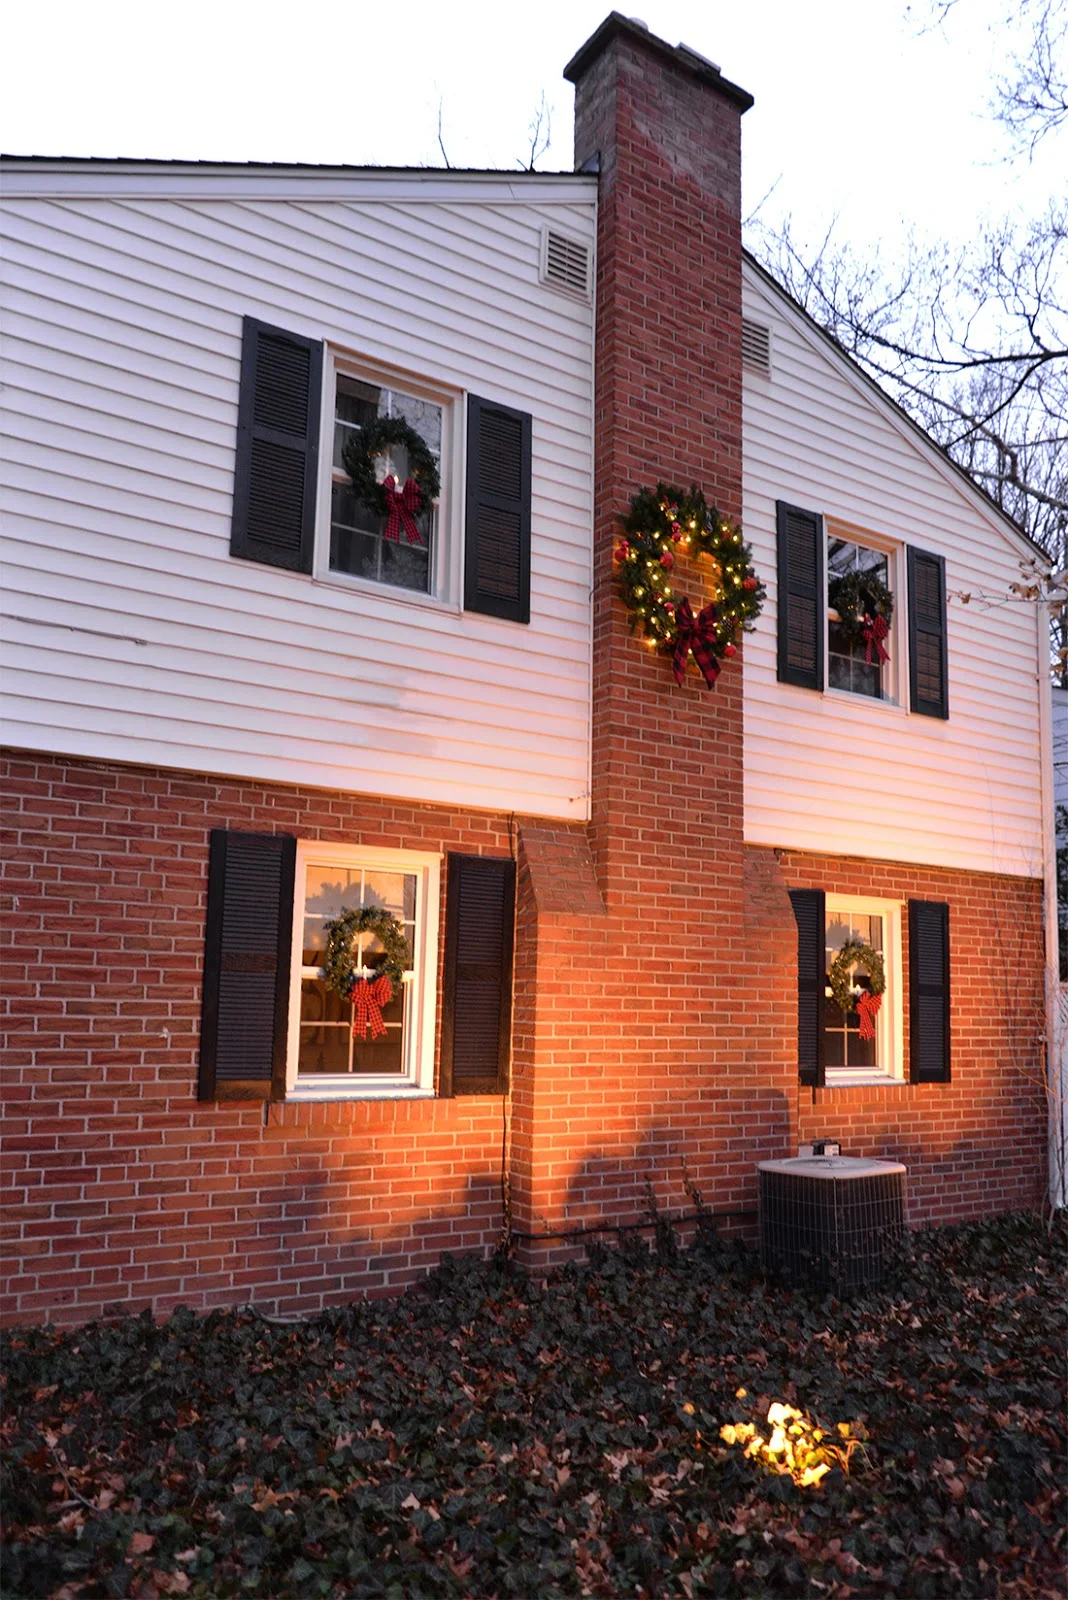 wreath on chimney, wreaths on every window, candles in window wreaths